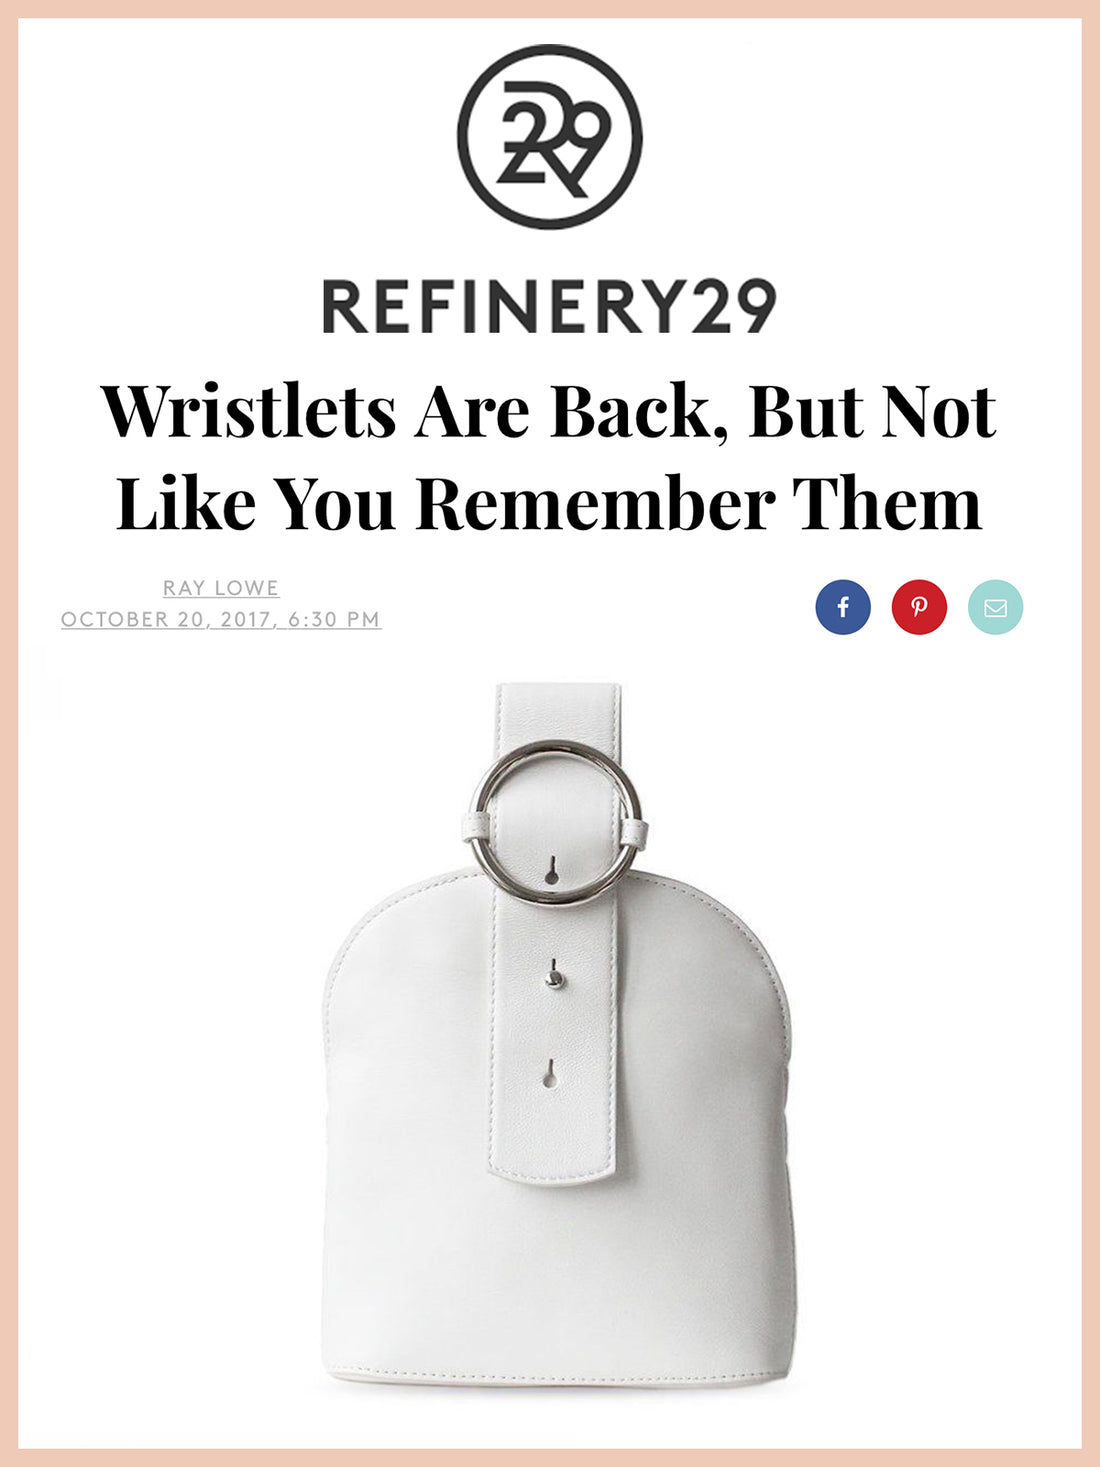 REFINERY29, Wristlets Are Back